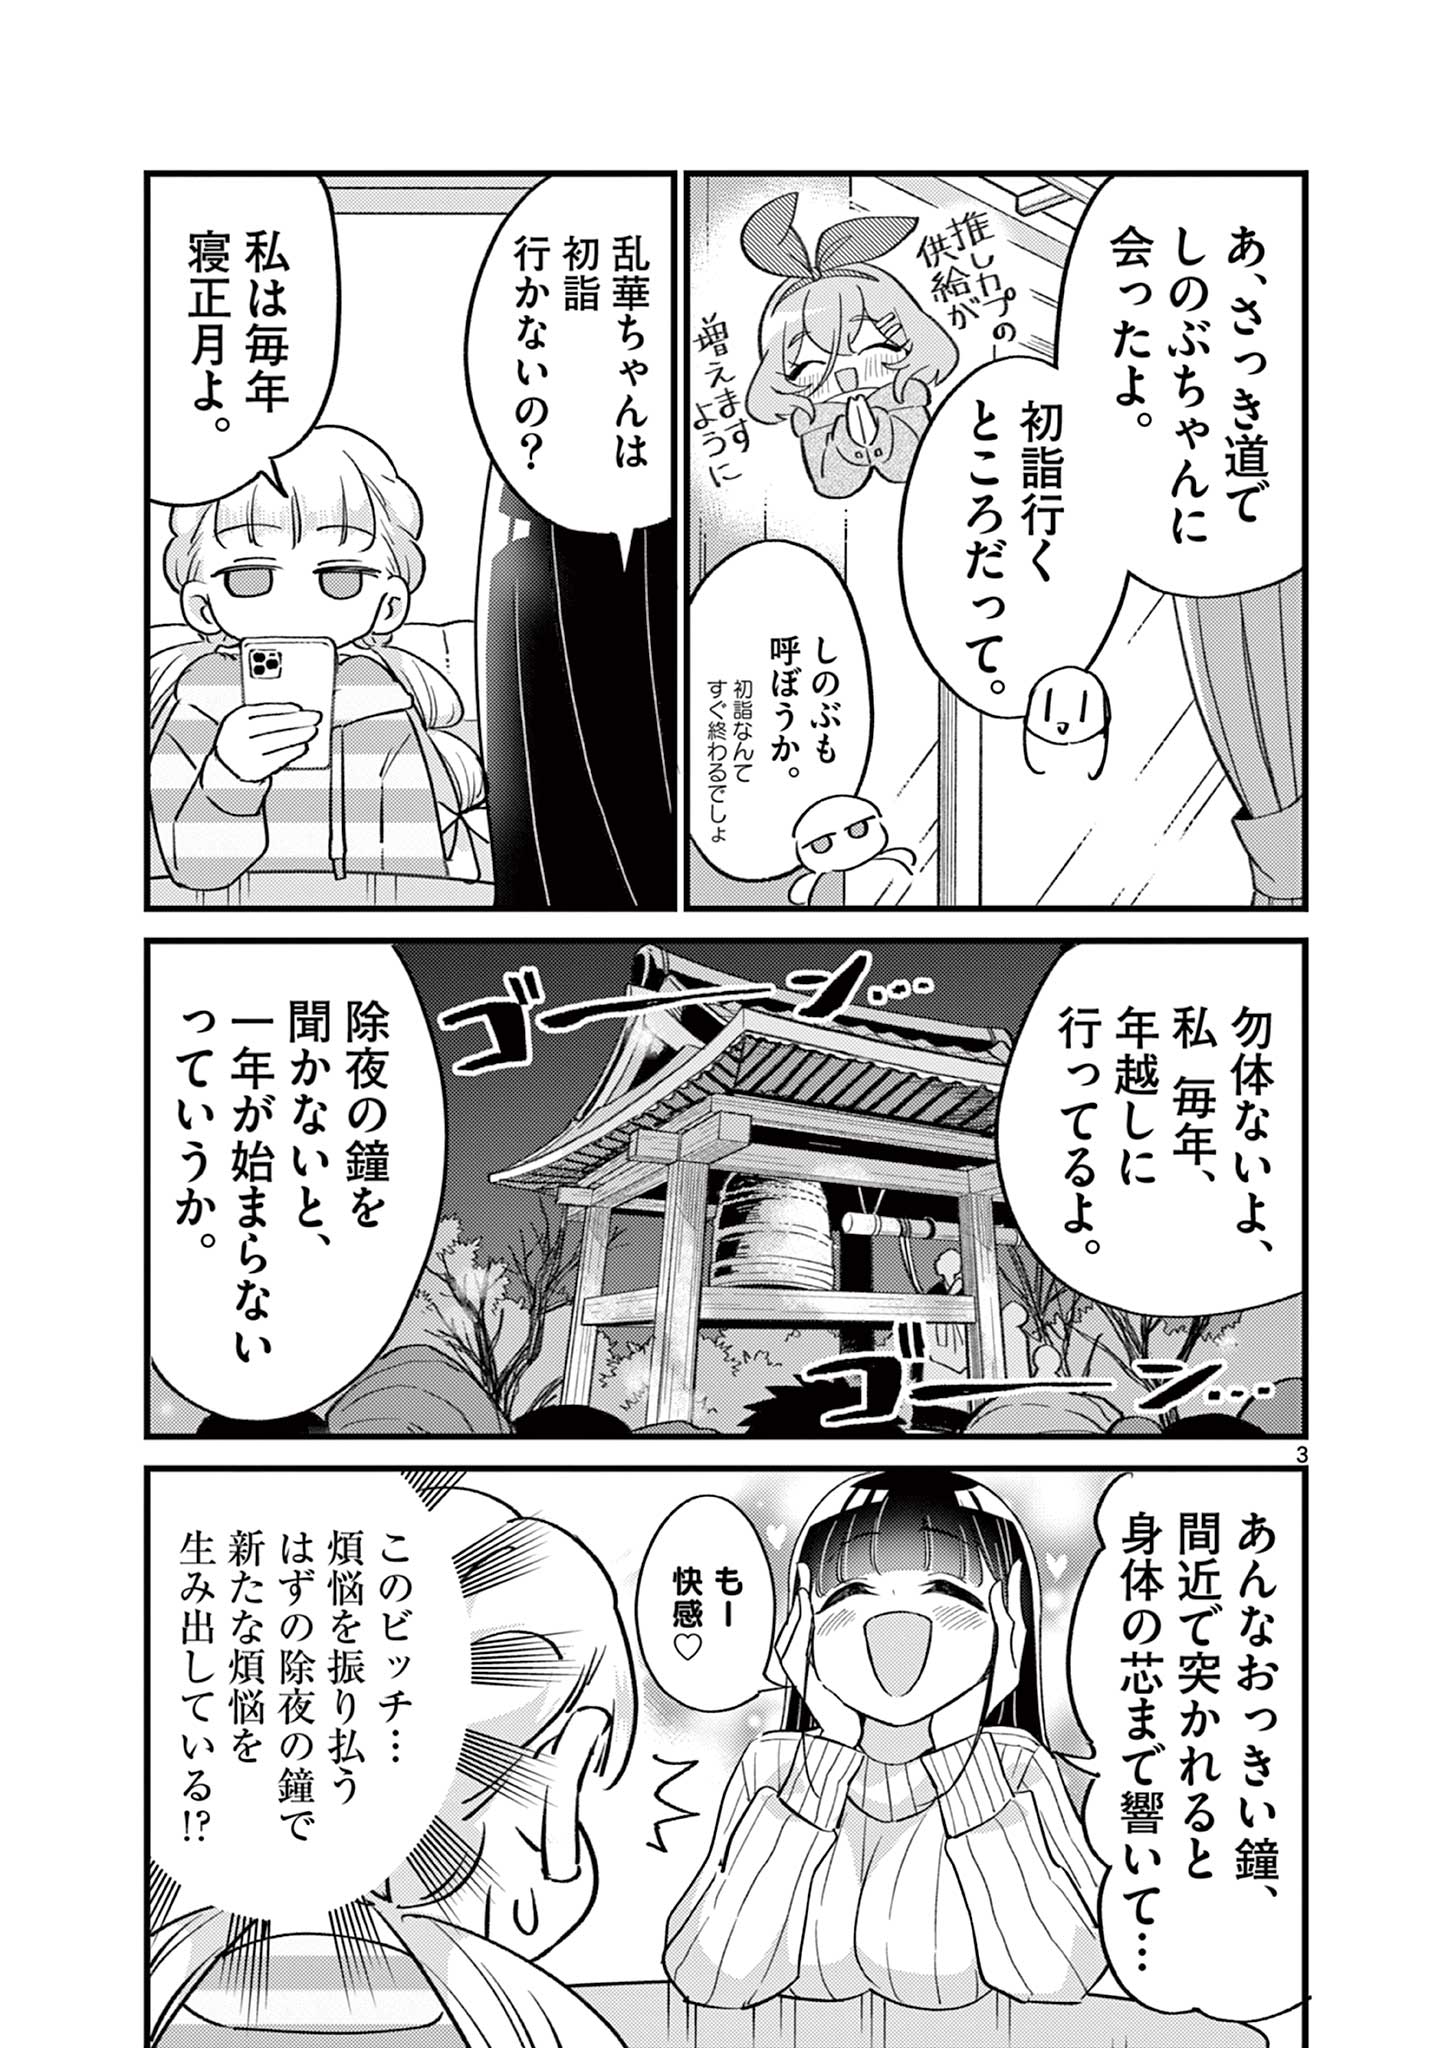 Ranka-chan wa Bitch ni Naritai - Chapter 17 - Page 3